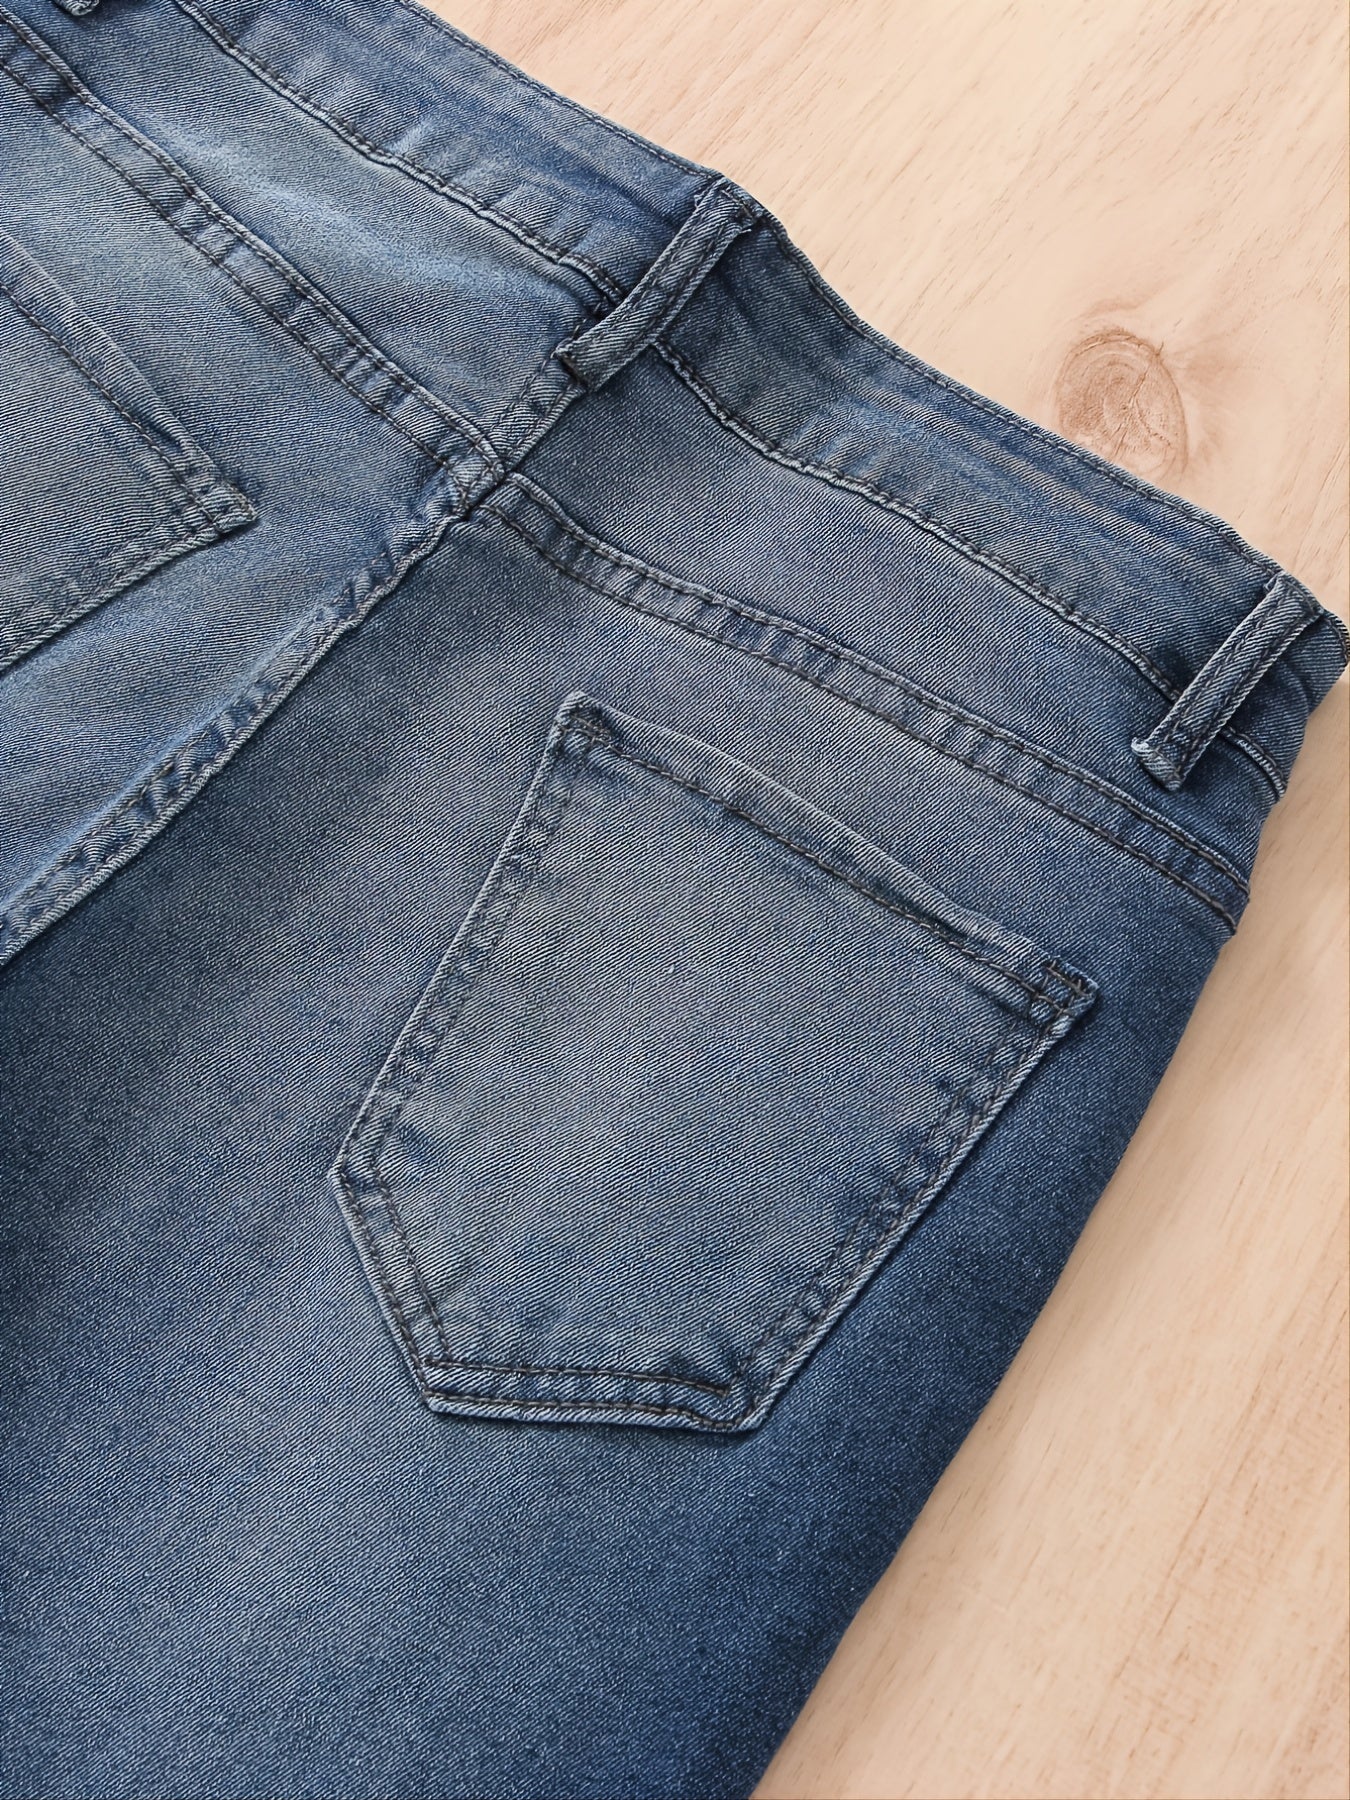 「binfenxie」Solid Bell Bottom Jeans, Washed Blue Flare Leg Denim Pants, Women's Denim Trousers